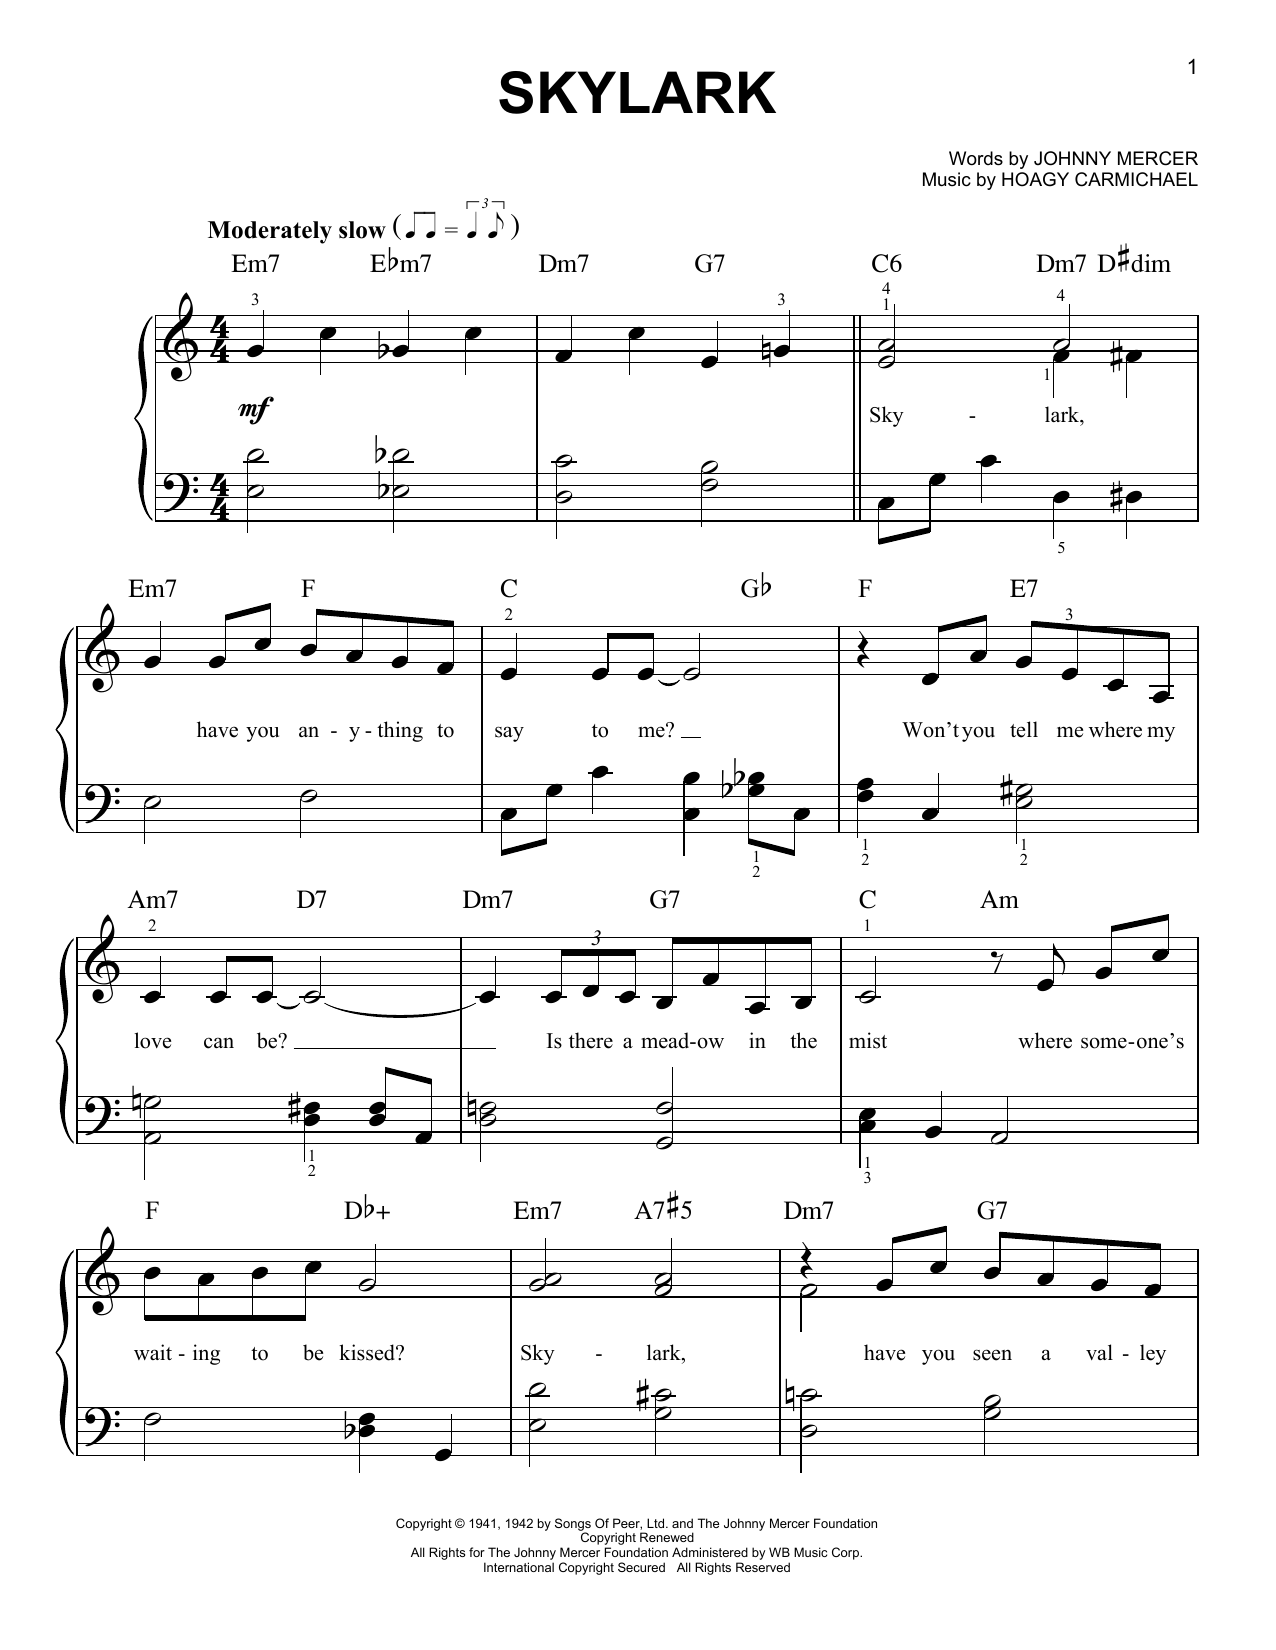 Hoagy Carmichael Skylark Sheet Music Notes & Chords for Voice - Download or Print PDF